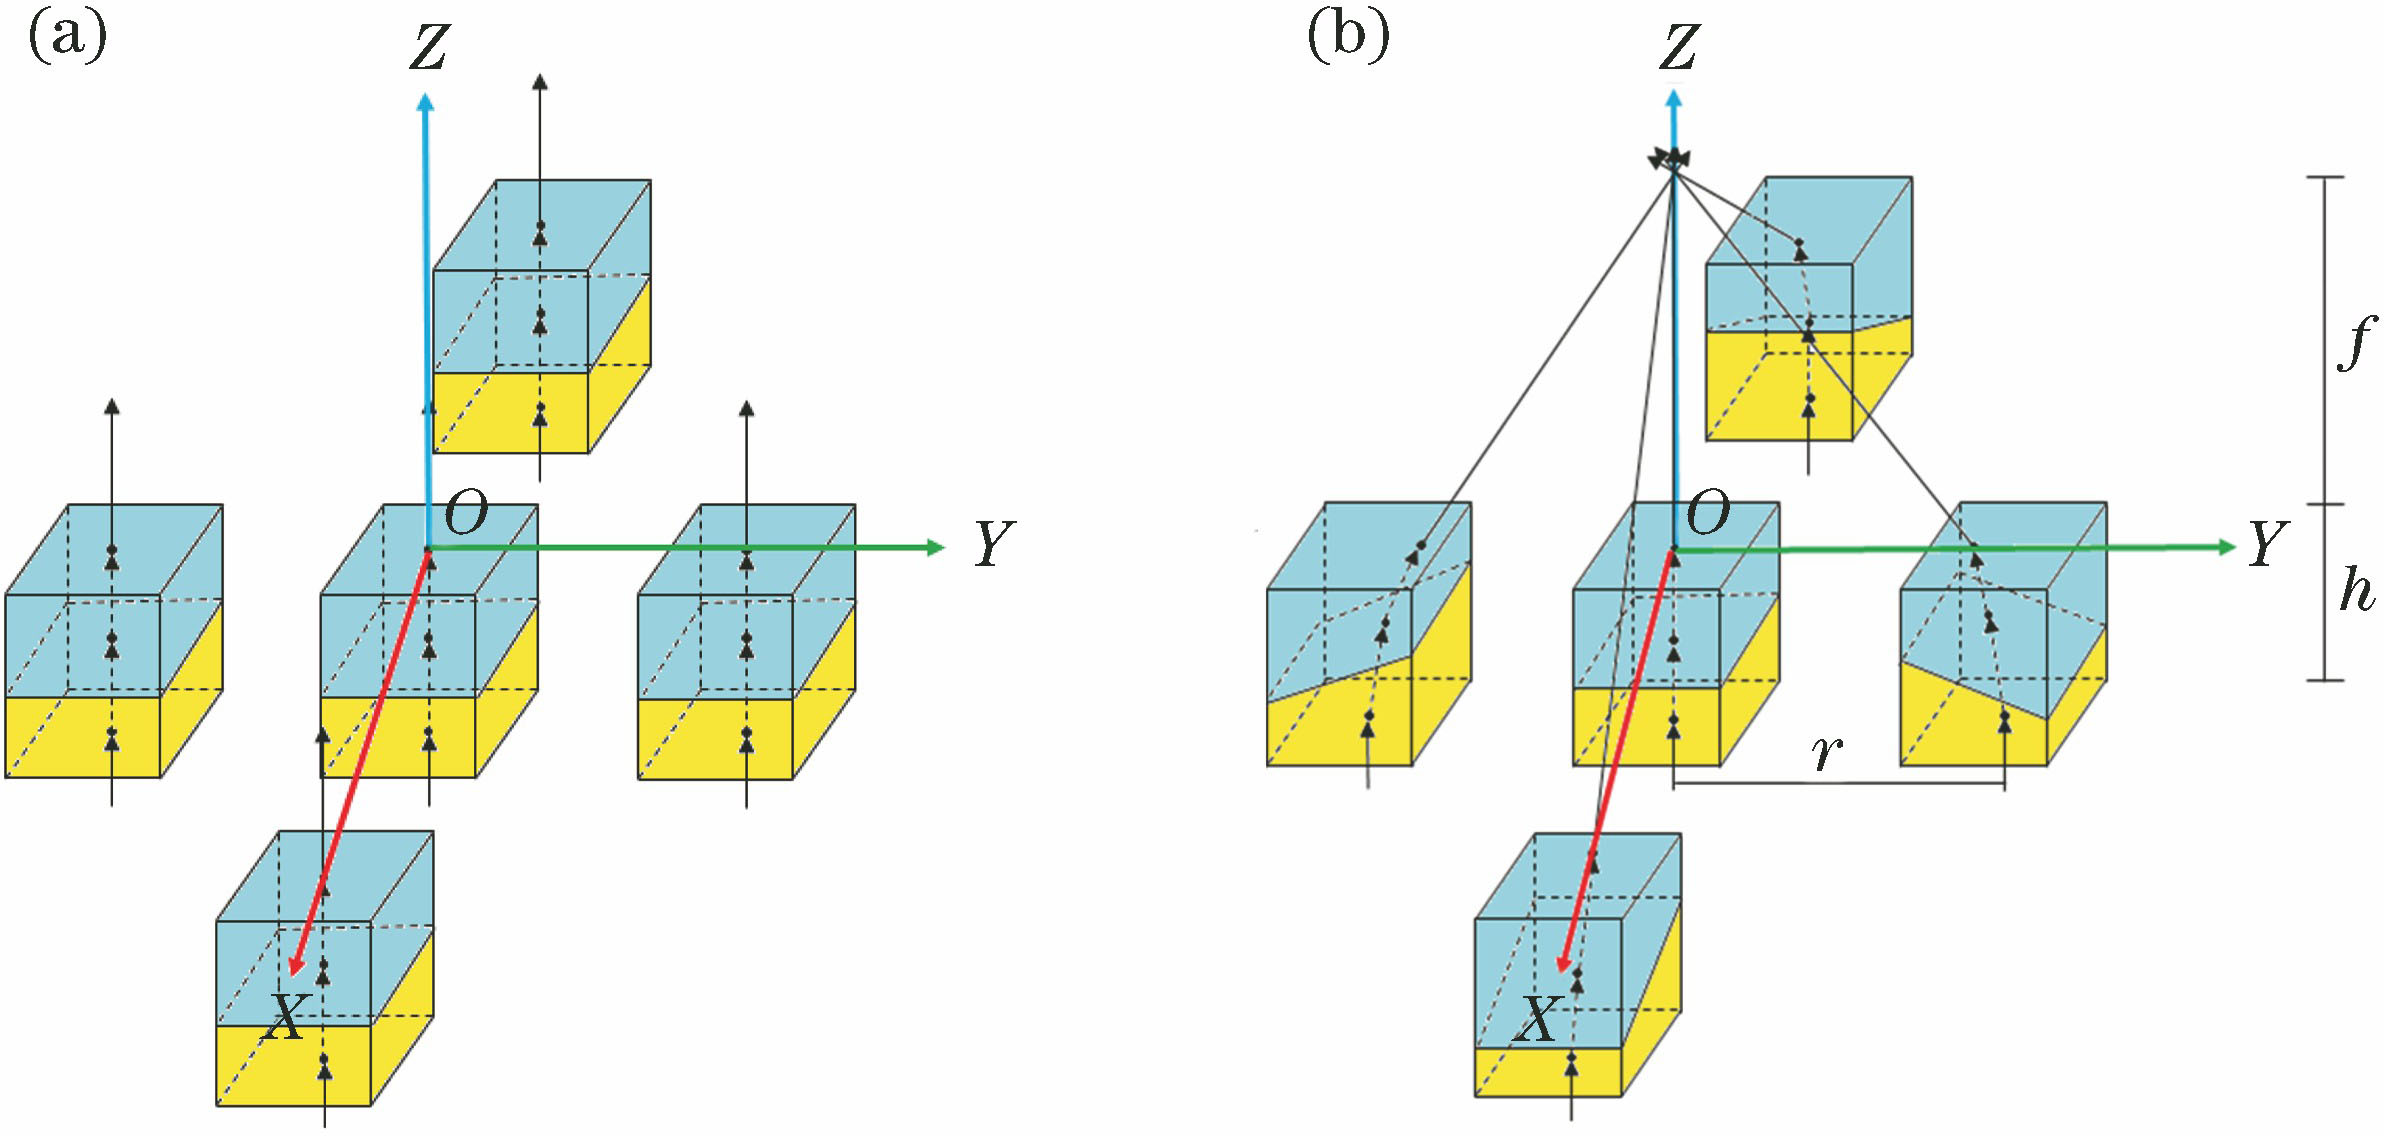 Beam steering diagrams of liquid prism. (a) Infinite focal length; (b) focusing on Z axis